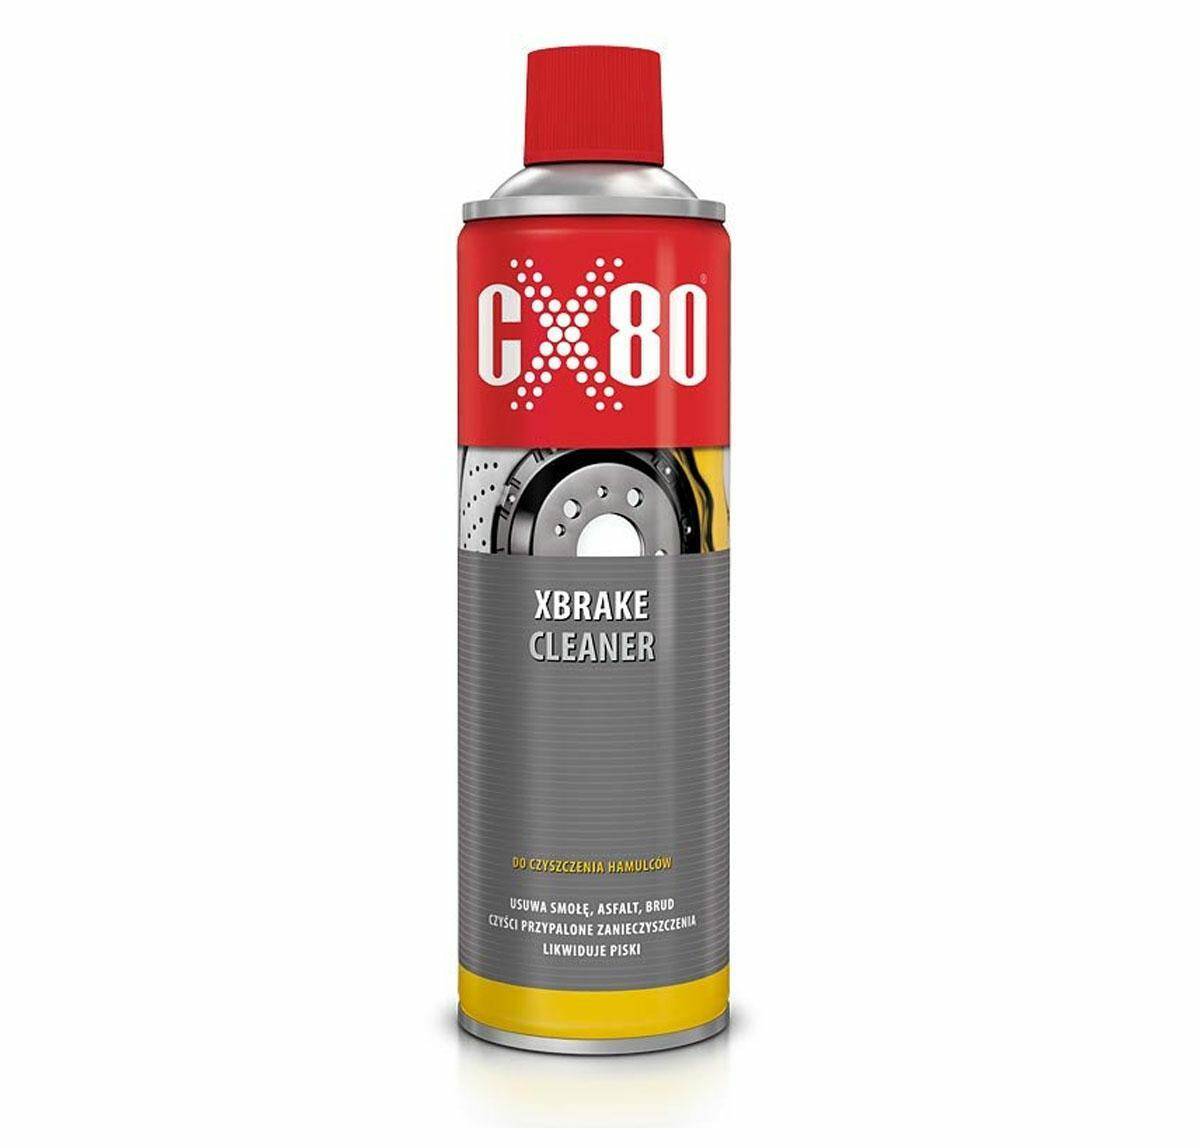 CX 80 XBRAKE CLEANER 600ml zmywacz do